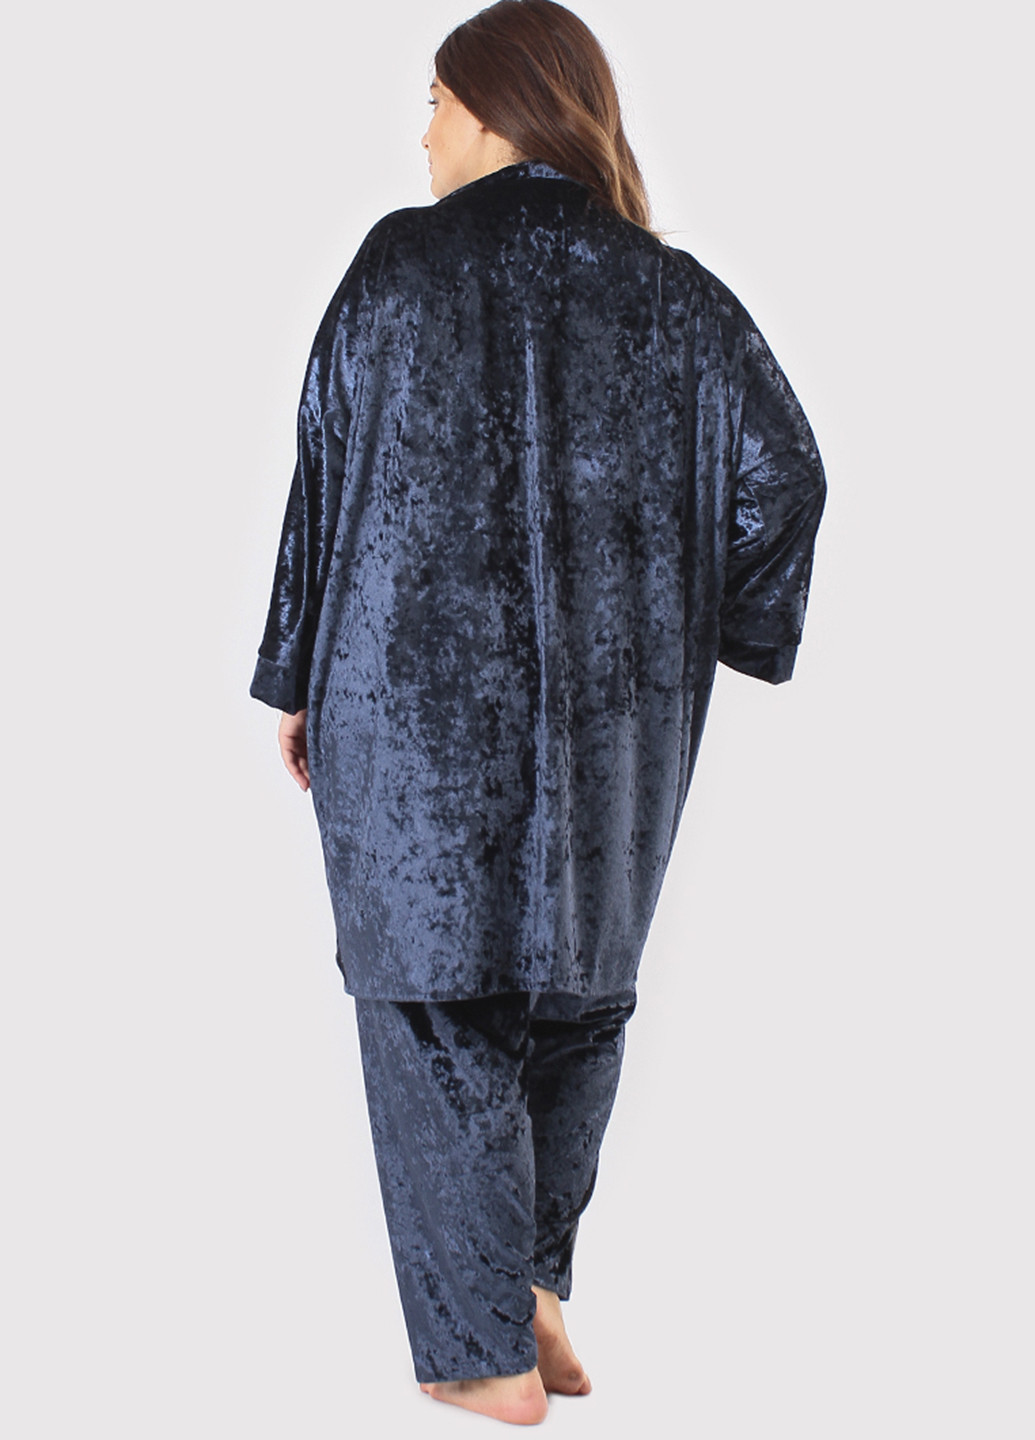 Темно-синий демисезонный комплект (халат, топ, брюки) Ghazel